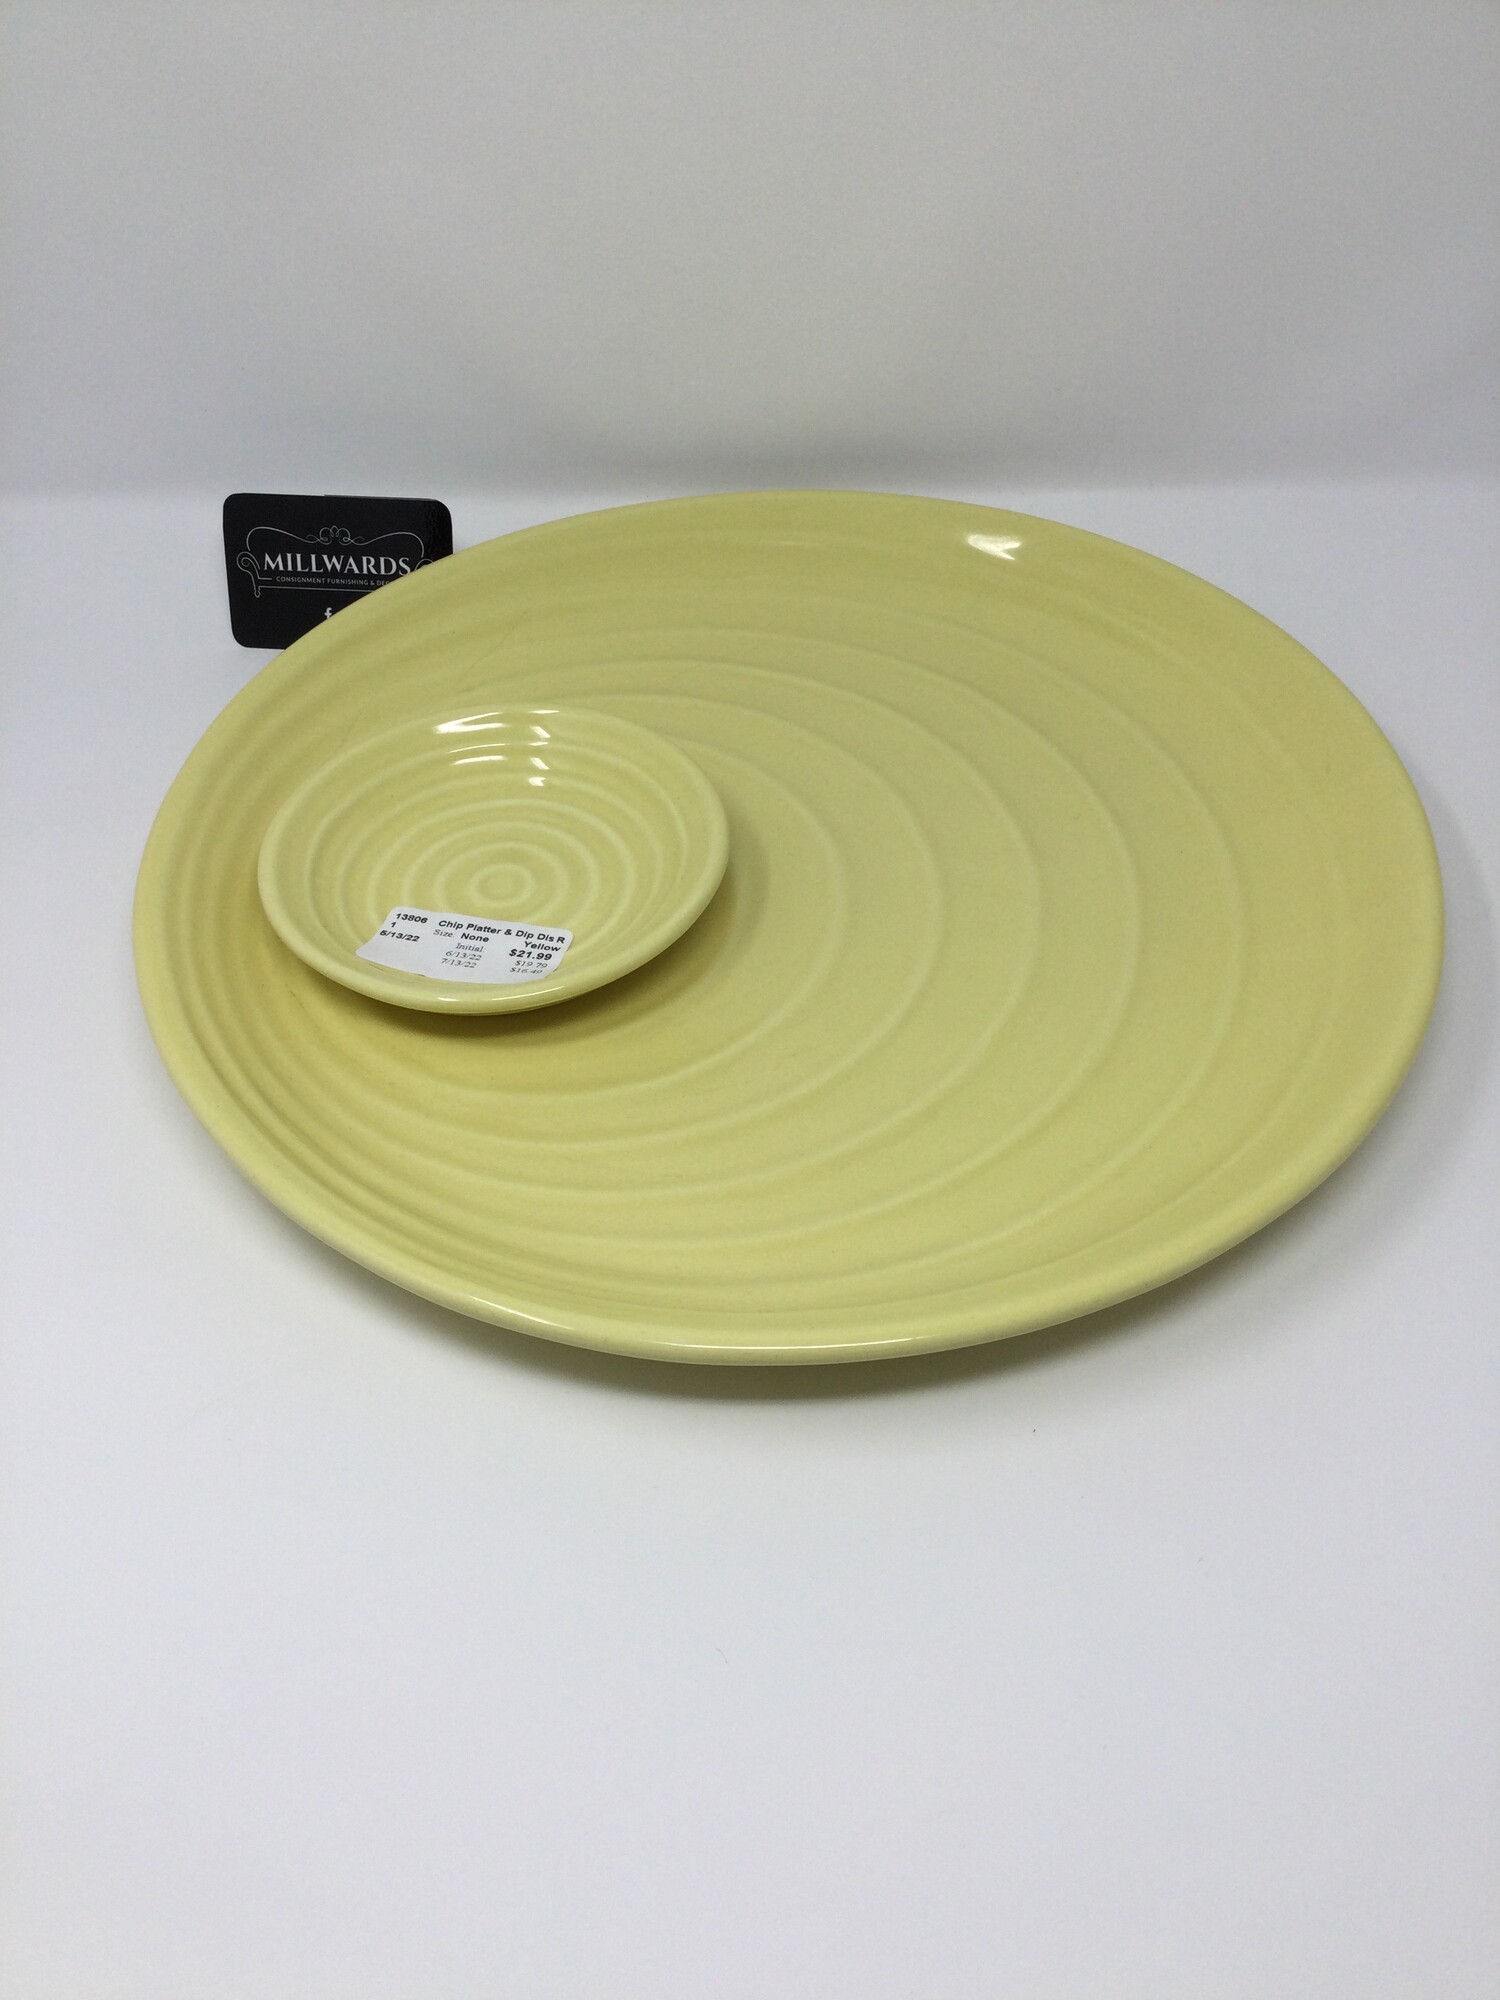 Chip Platter & Dip Dish
Yellow